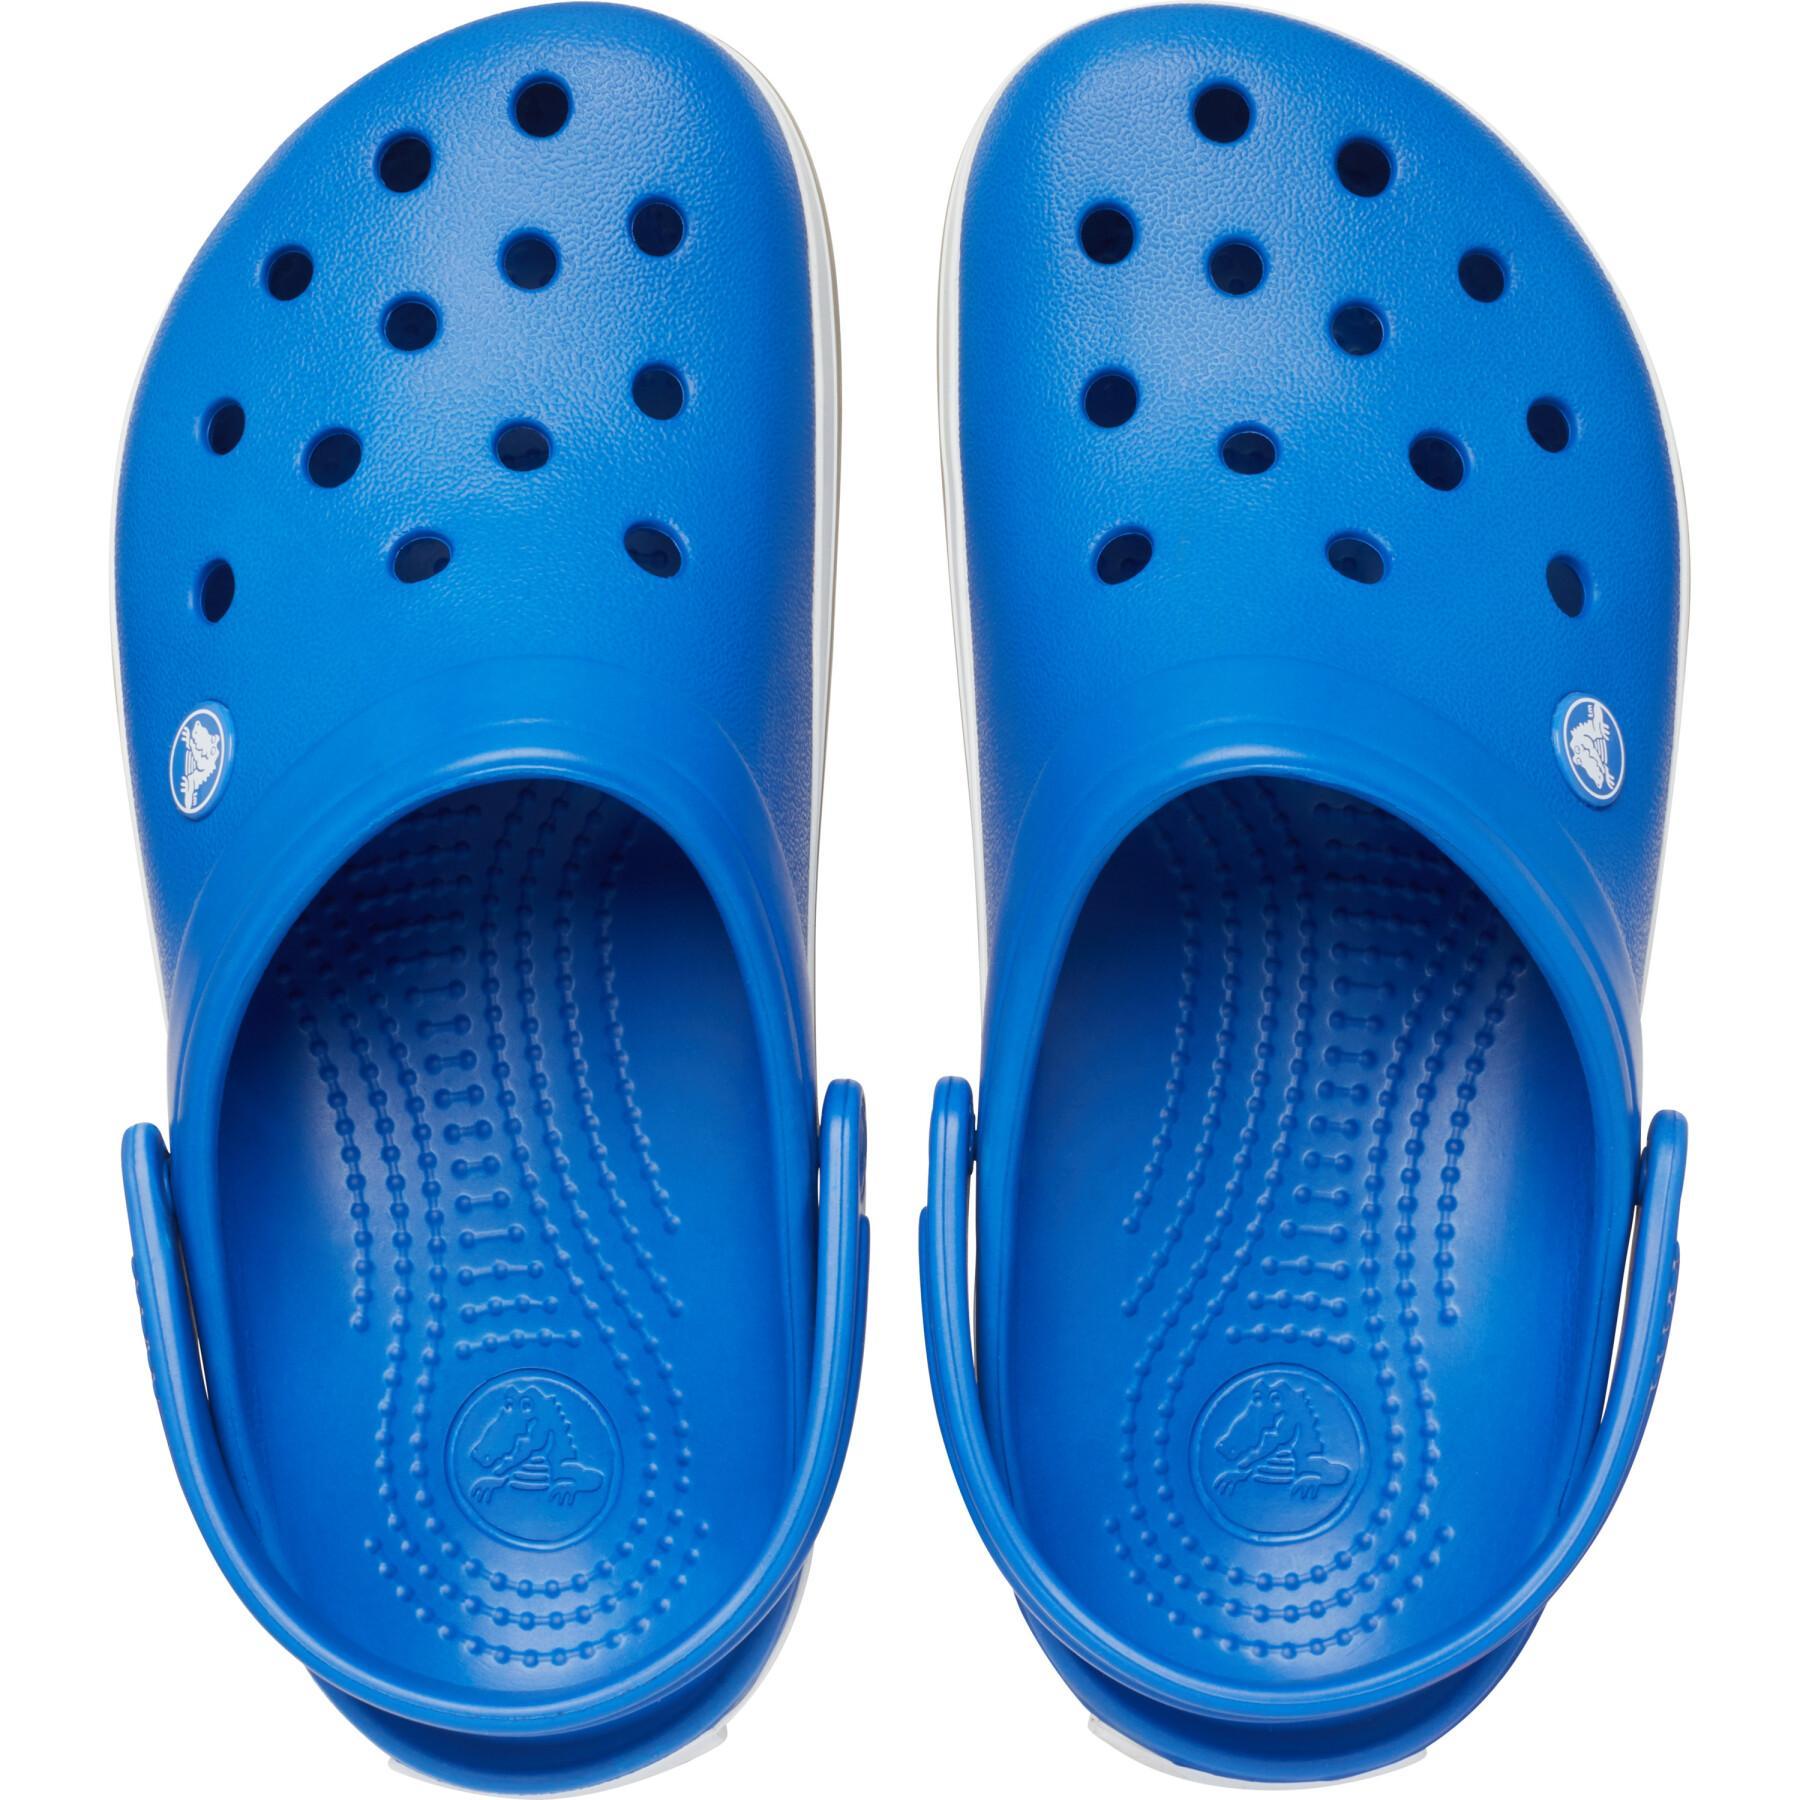 Children's clogs Crocs Crocband™